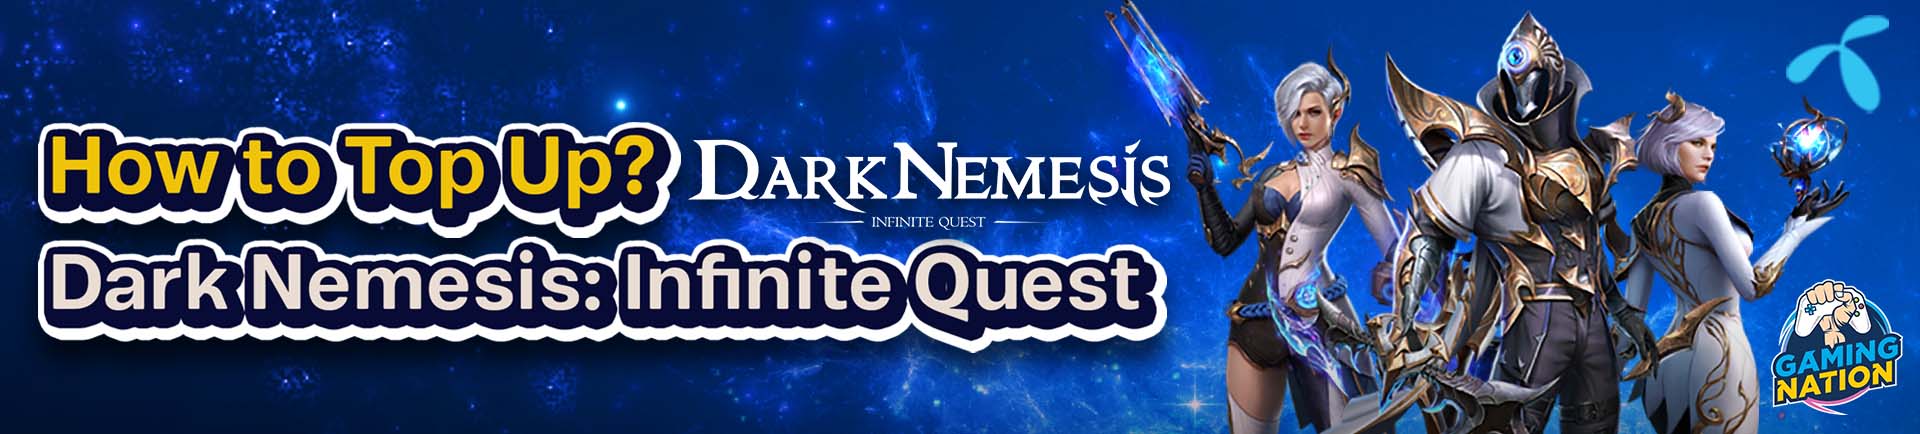 Dark Nemesis: Infinite Quest Top Up Guide